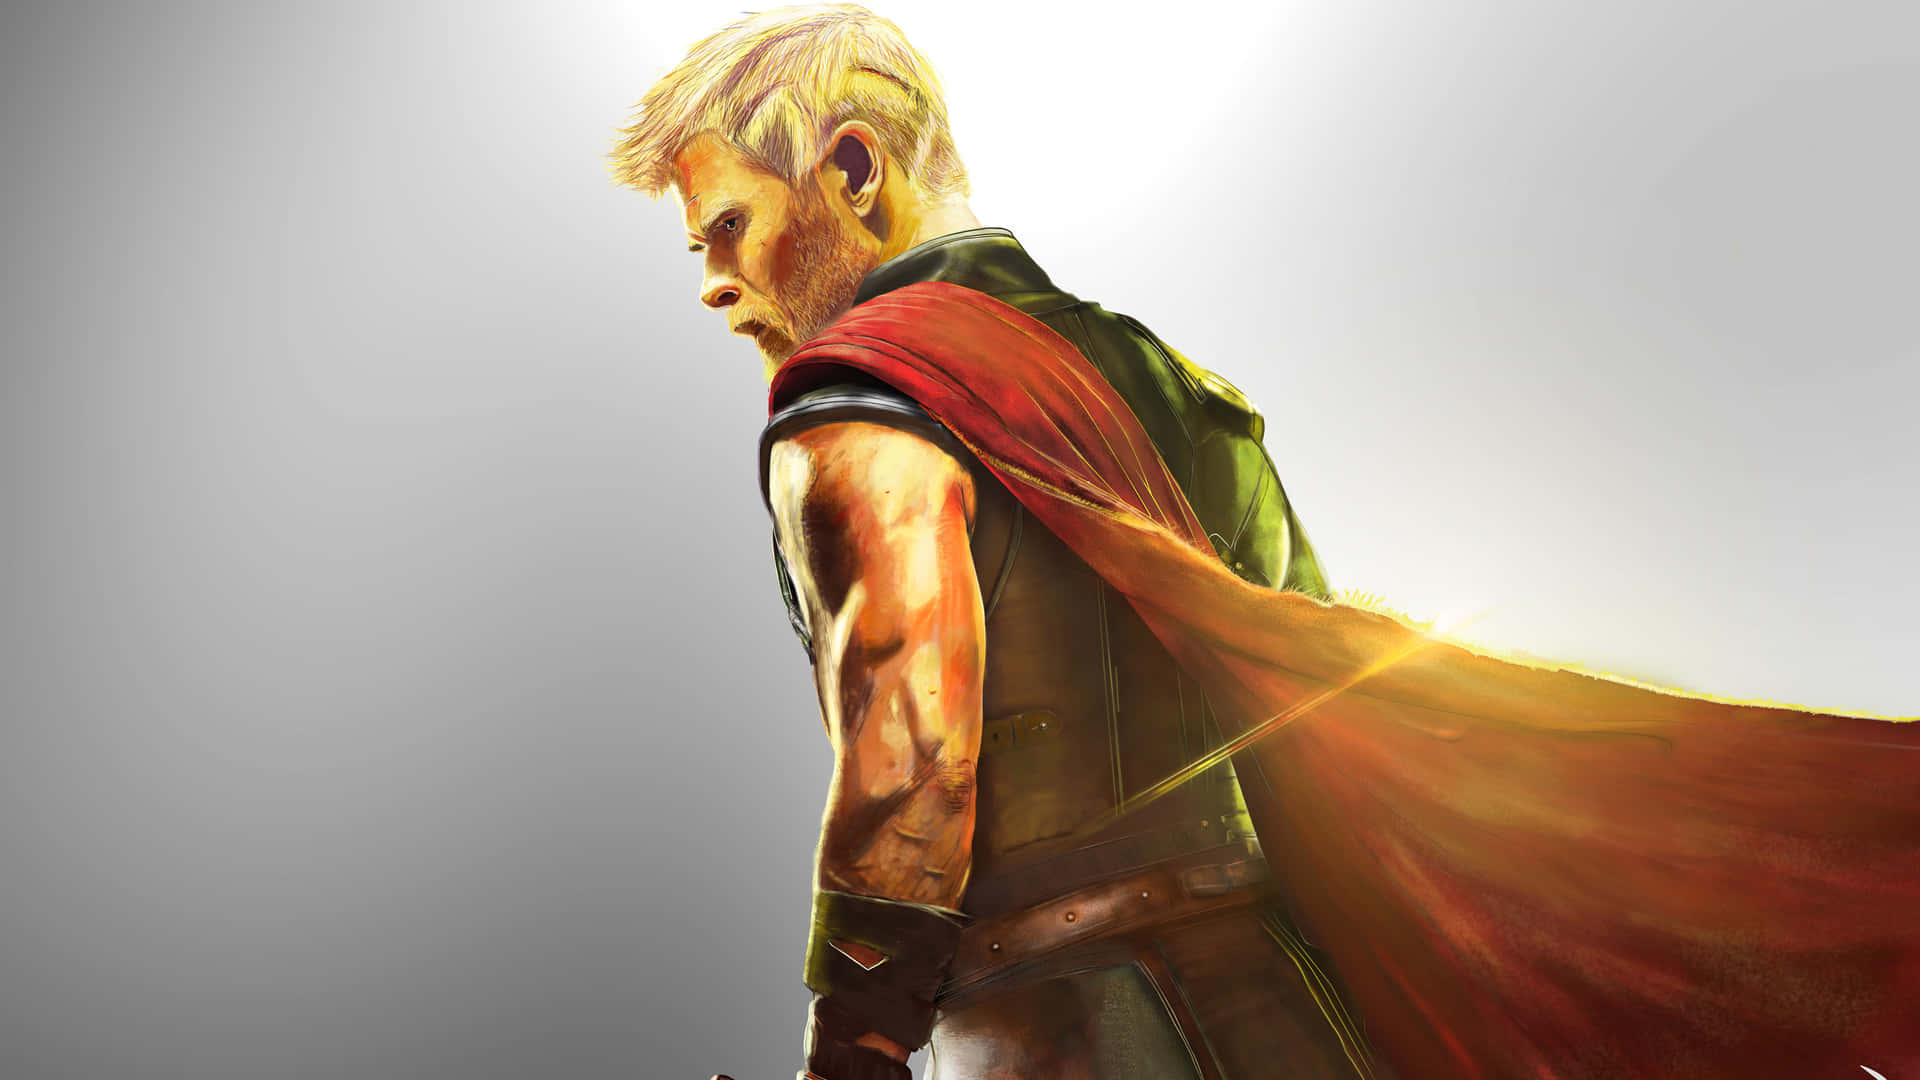 "Thor battles Hela in the epic Marvel movie, Thor Ragnarok" Wallpaper